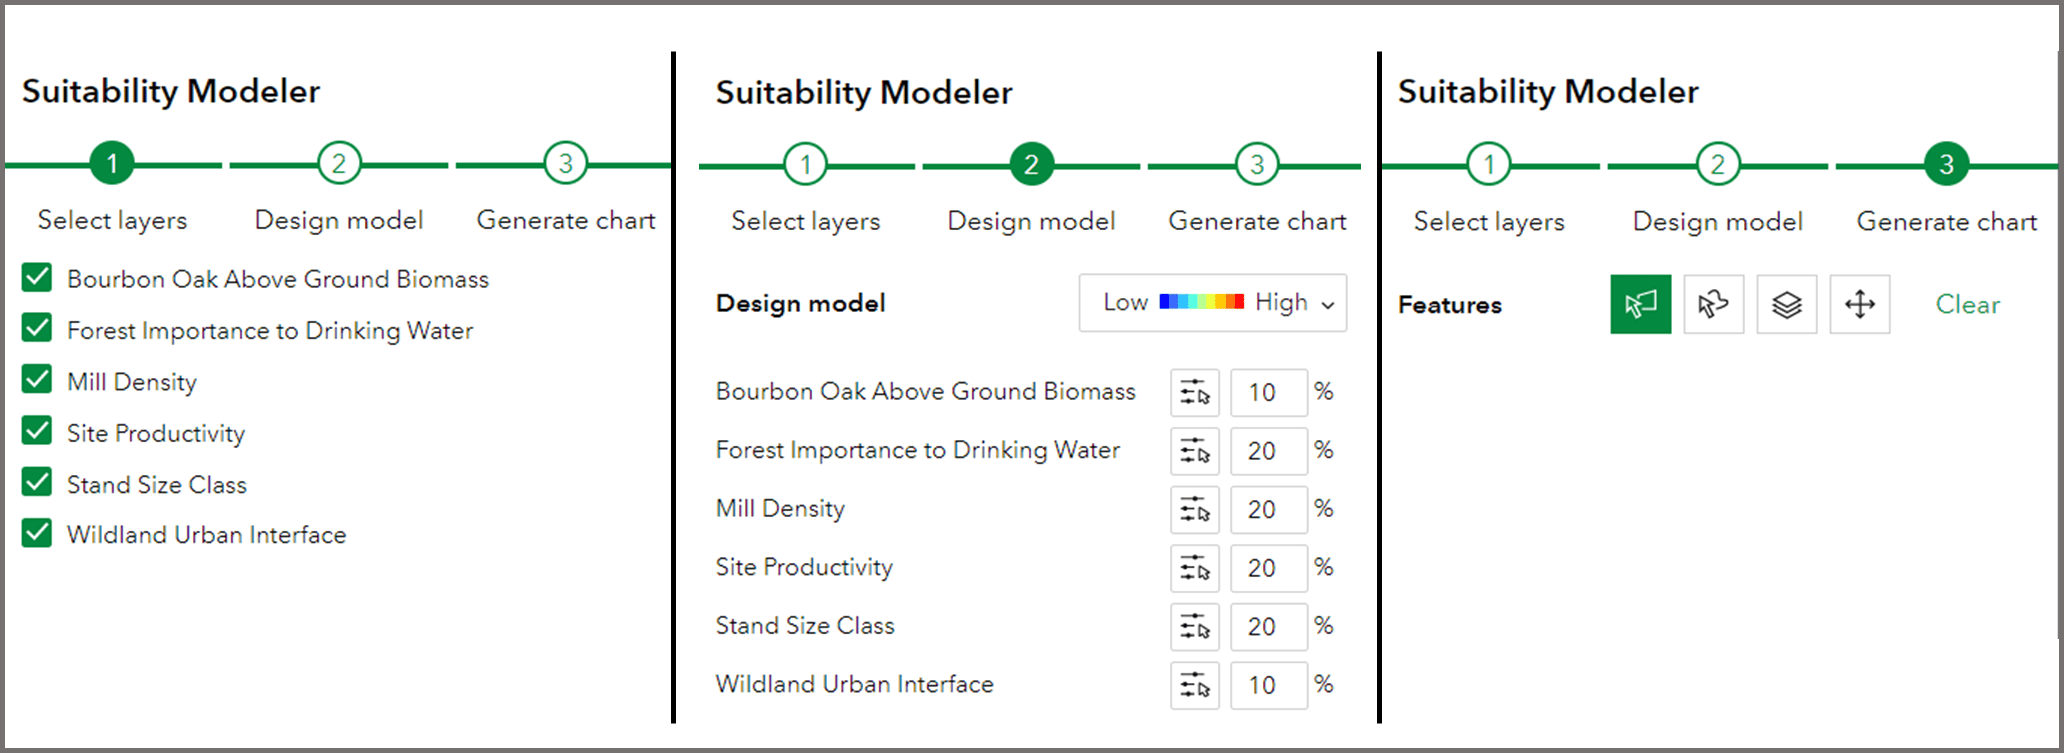 Suitability Modeler Tool process